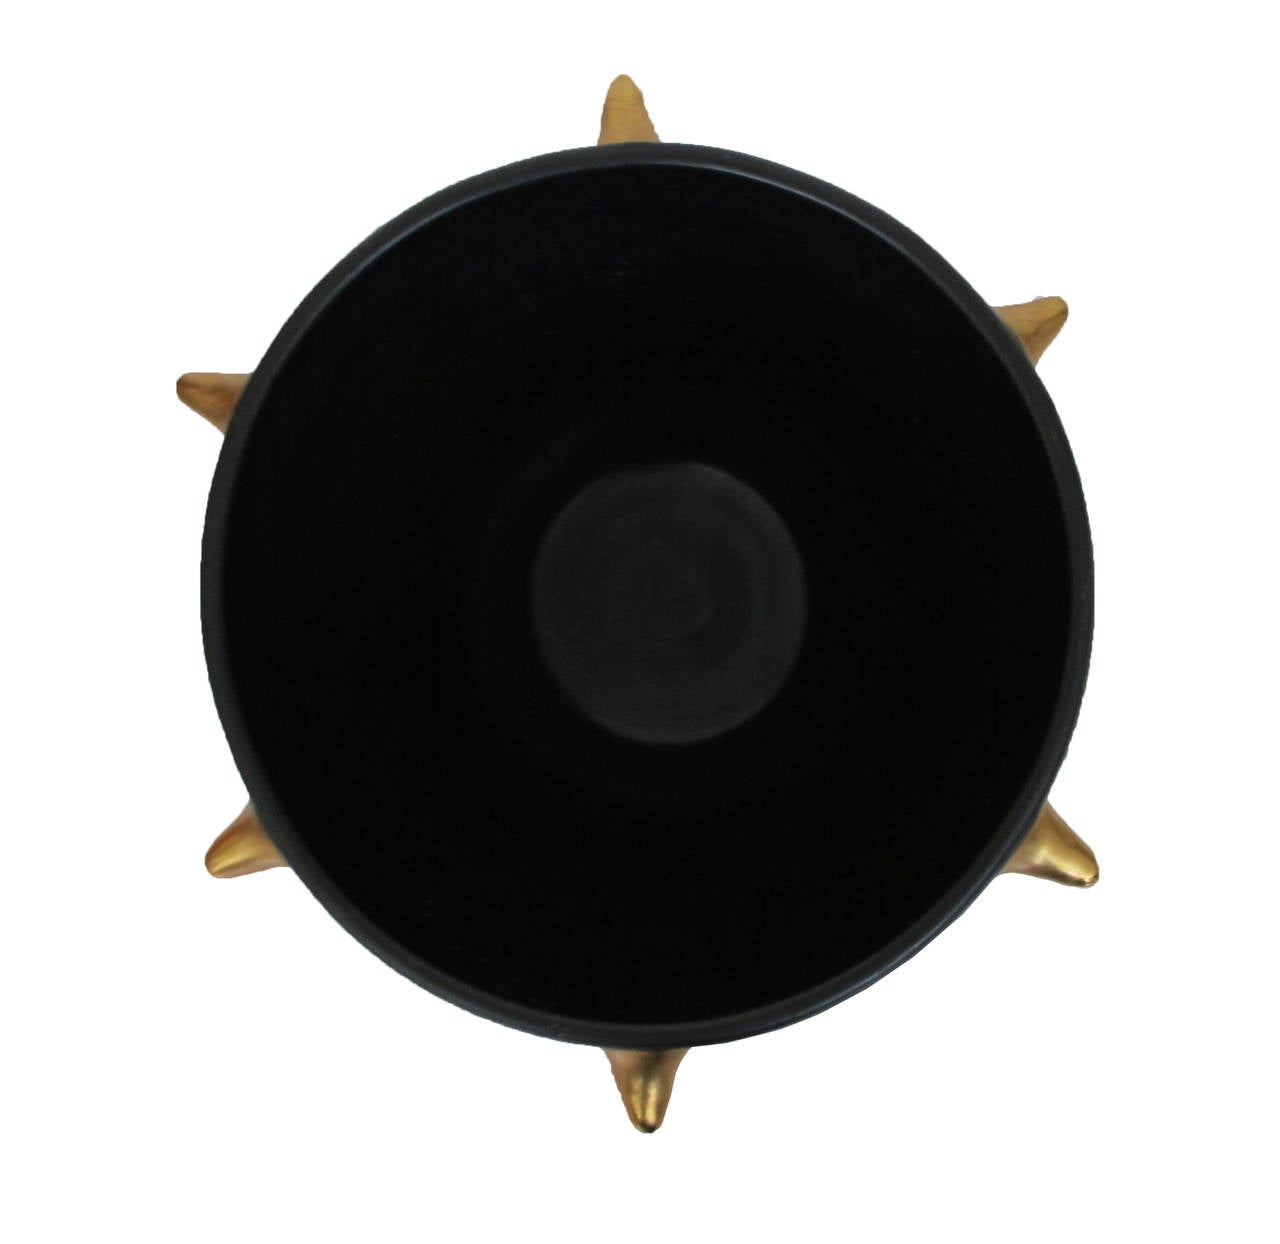 Glazed Bitossi Raymor Italian Ceramic Bowl Gunmetal Gold Spikes, Signed, Italy, 1960s